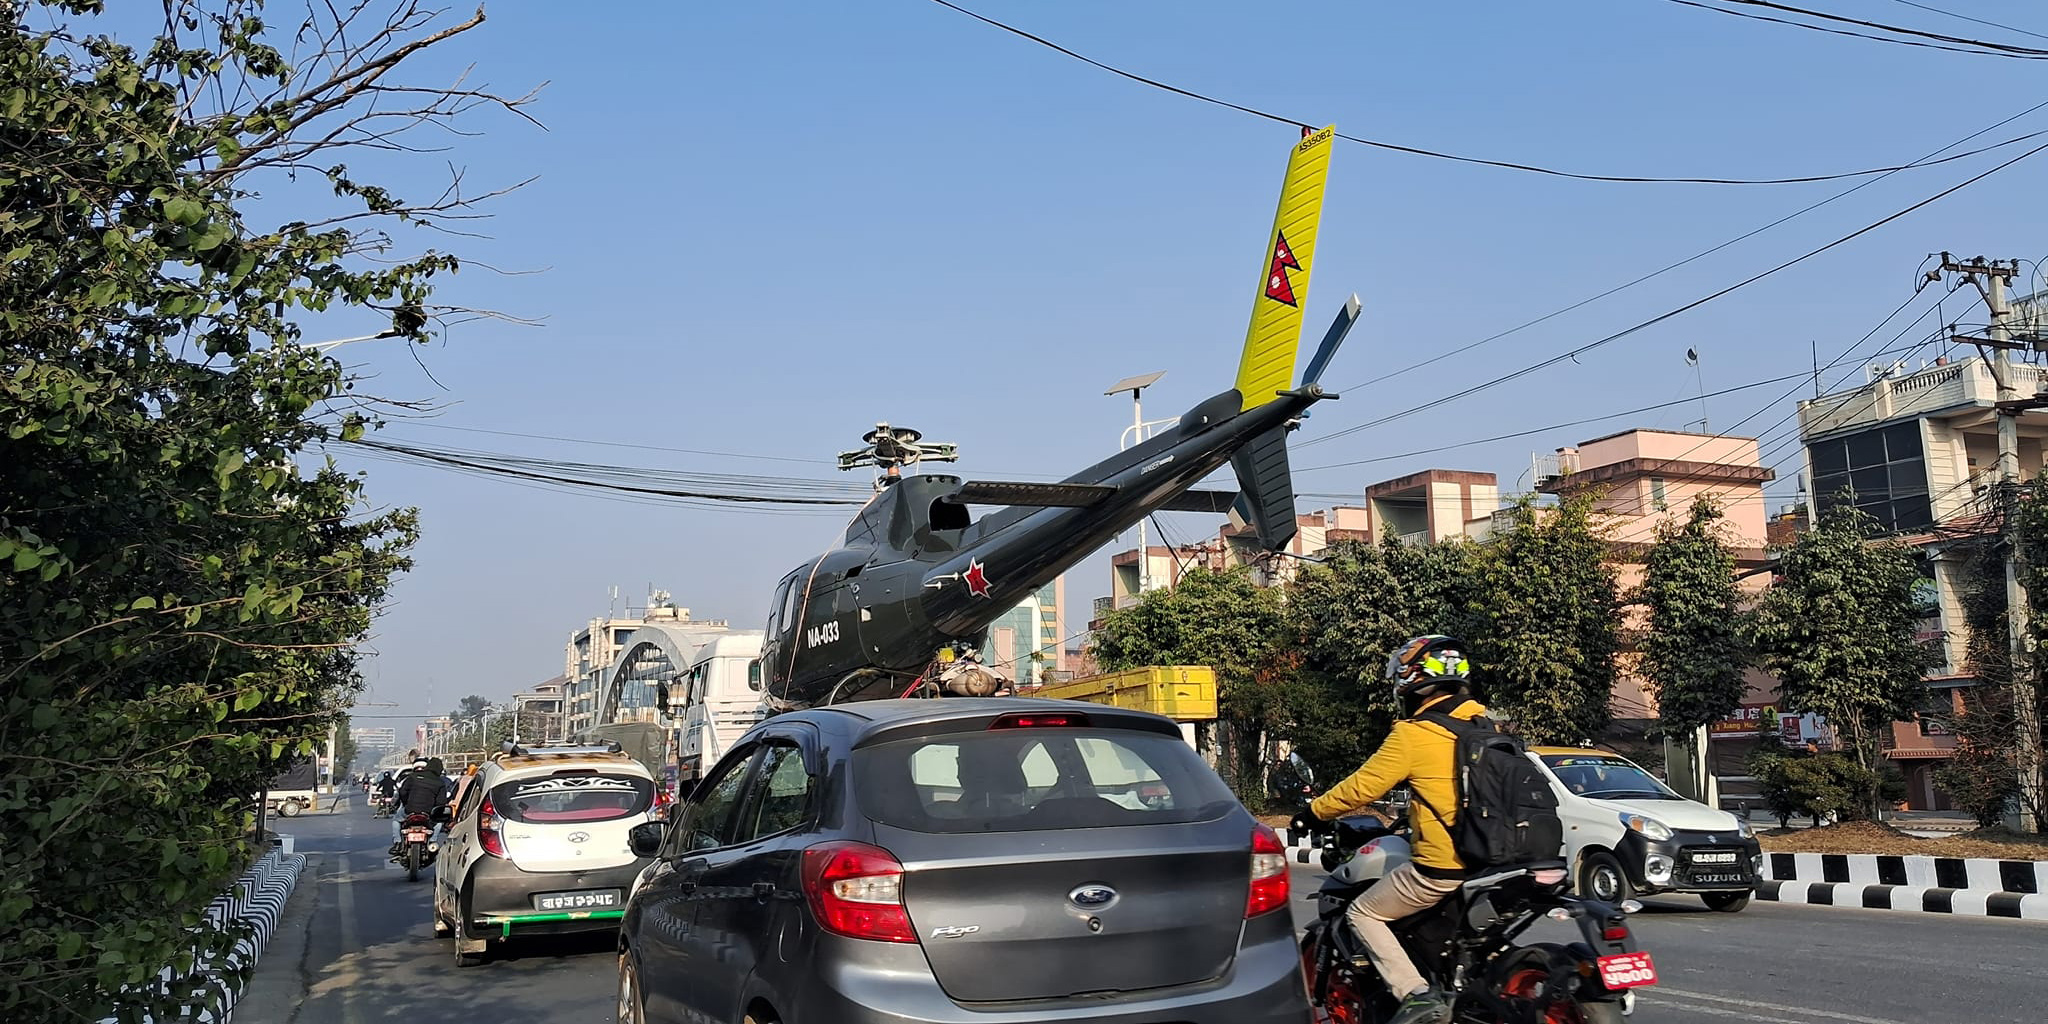 Army chopper turns heads in New Baneshwar